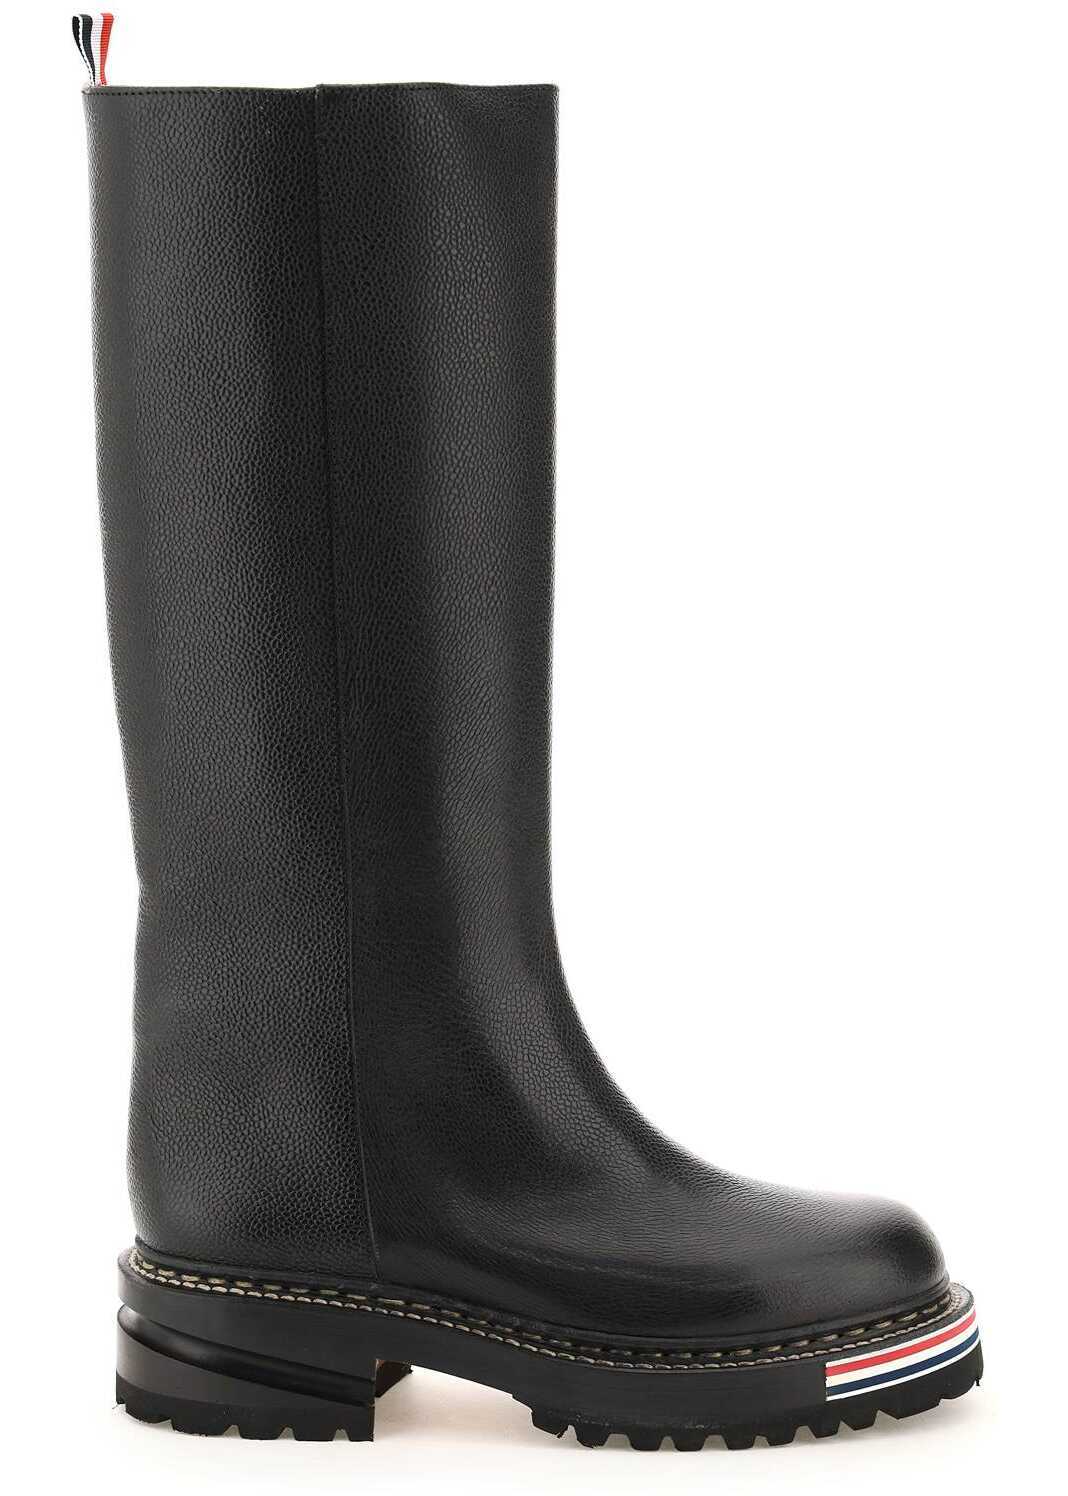 Thom Browne Tubular Boots In Pebble Grain Leather BLACK b-mall.ro